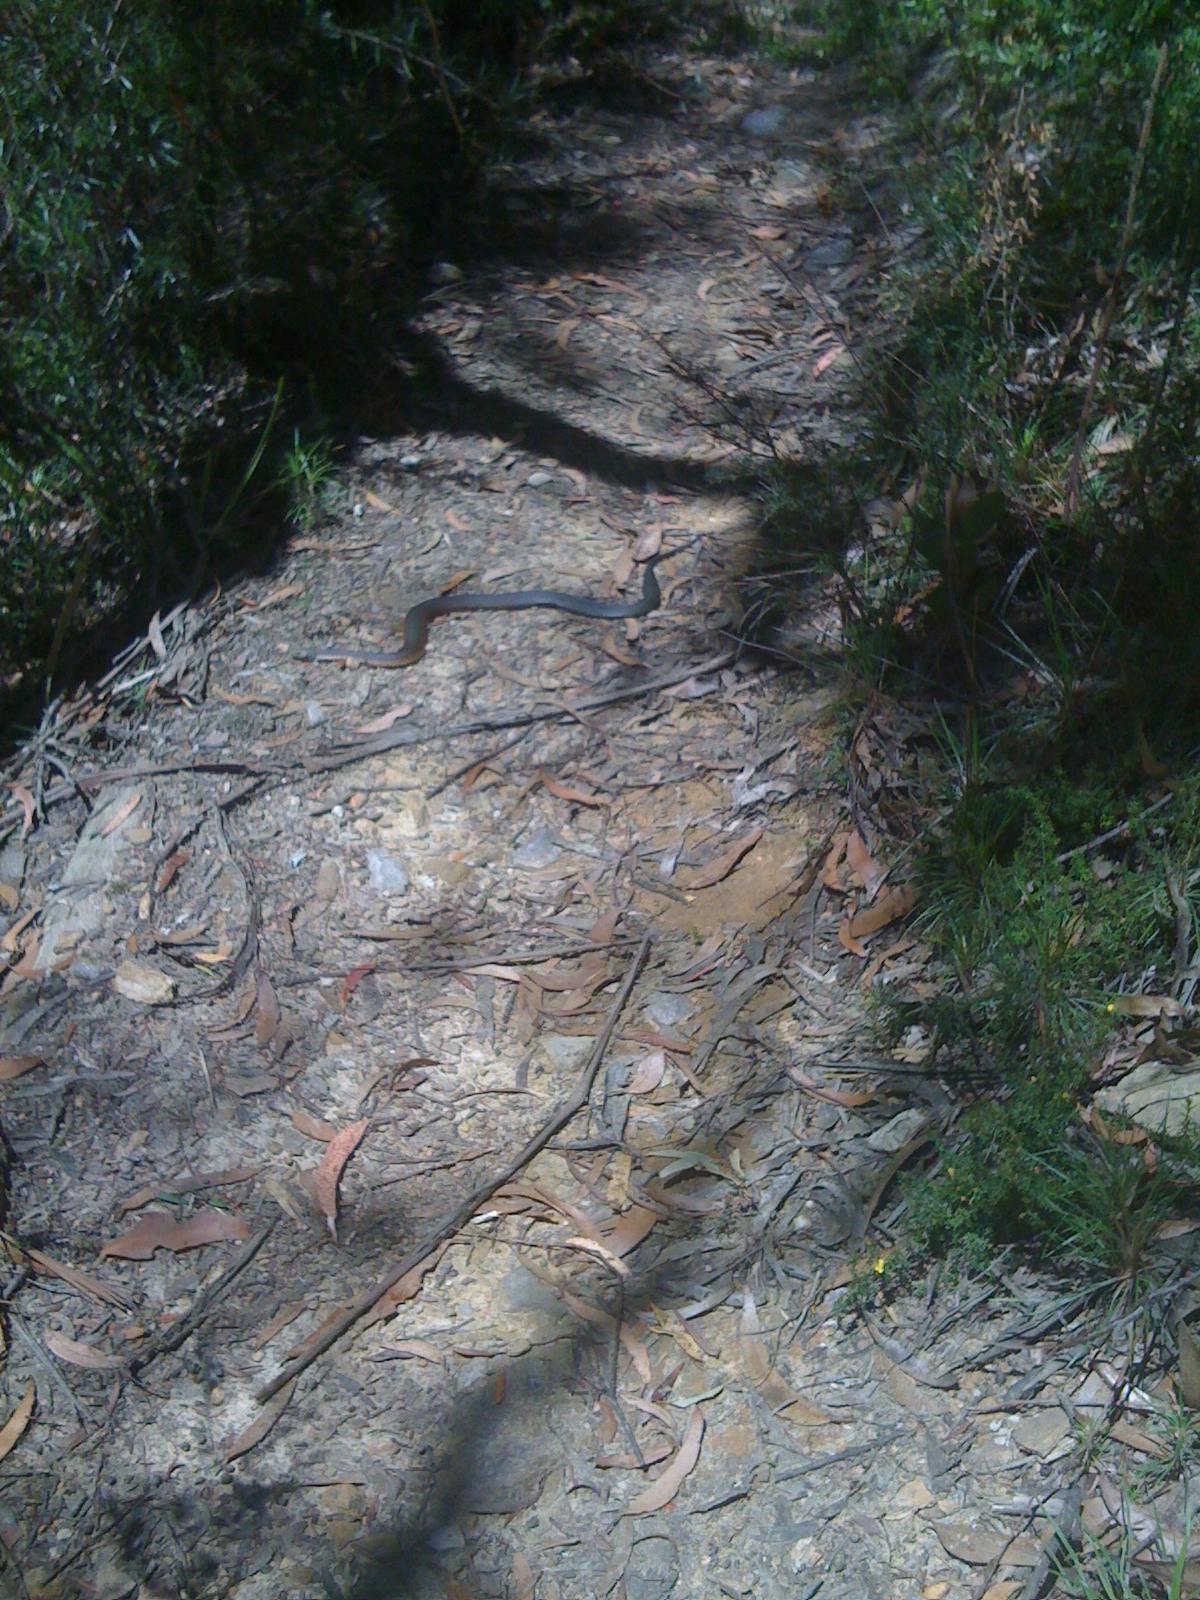 Highland copperhead (Austrelaps ramsayi)